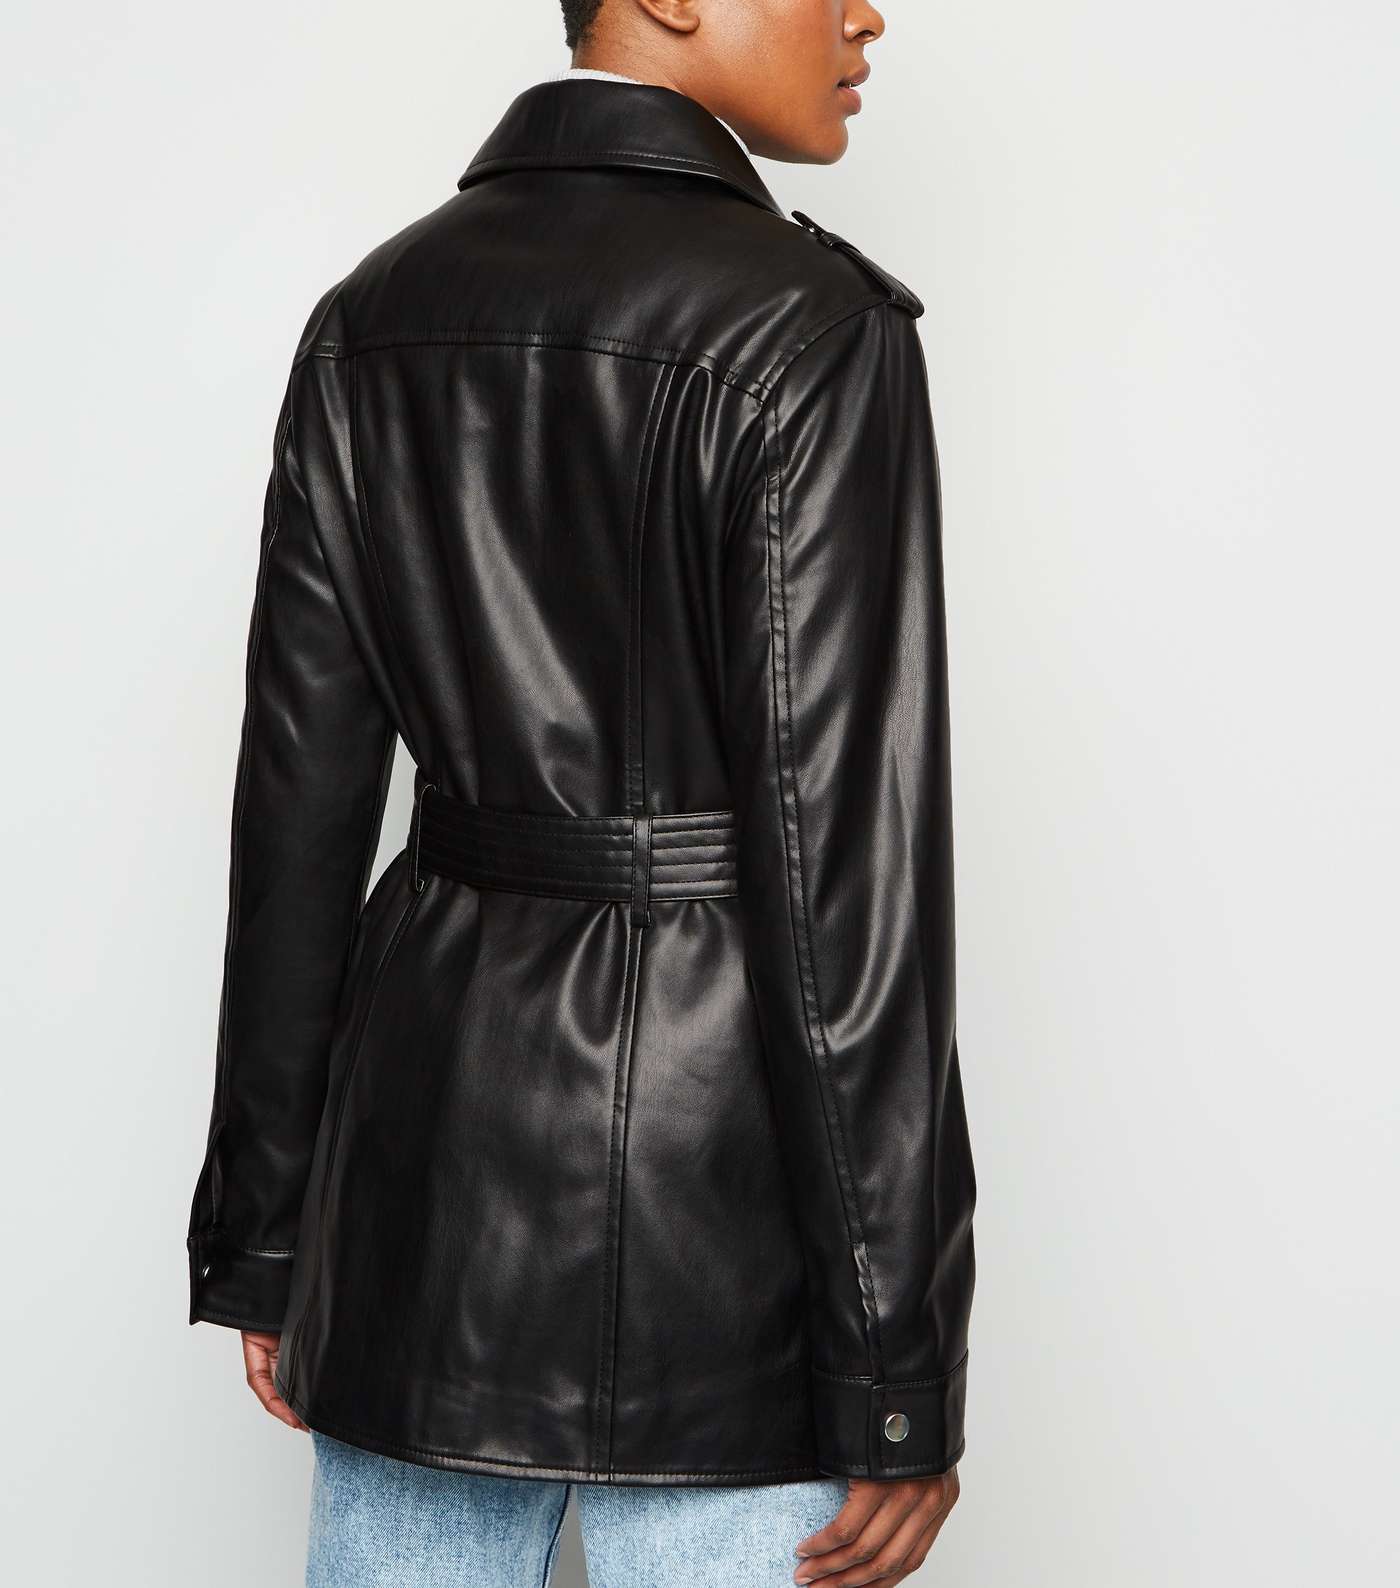 Cameo Rose Black Leather-Look Utility Jacket Image 3